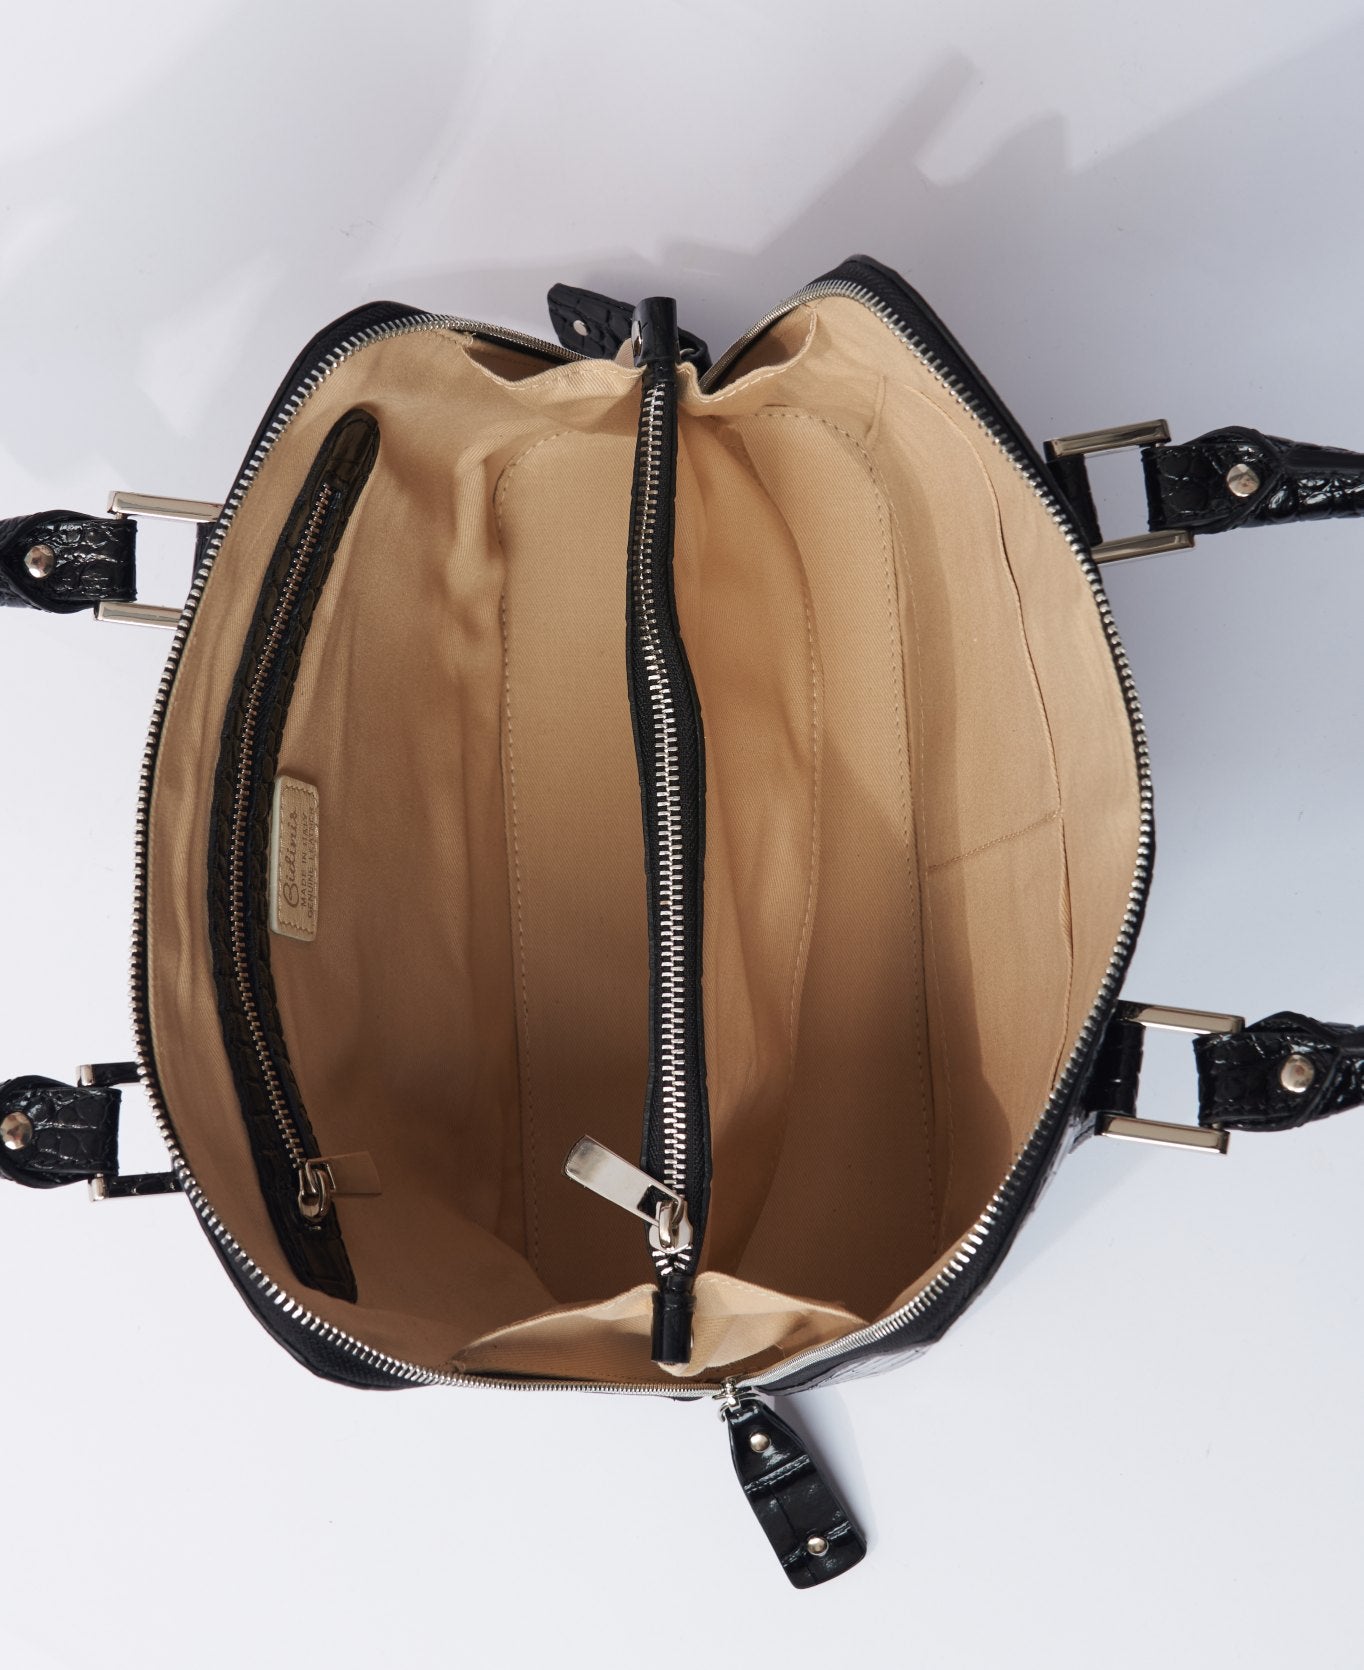 cocco leather bag, black leather bag, Italian leather handbag, well-organised interior bag, lightweight leather bag, bidini bags, leather bag